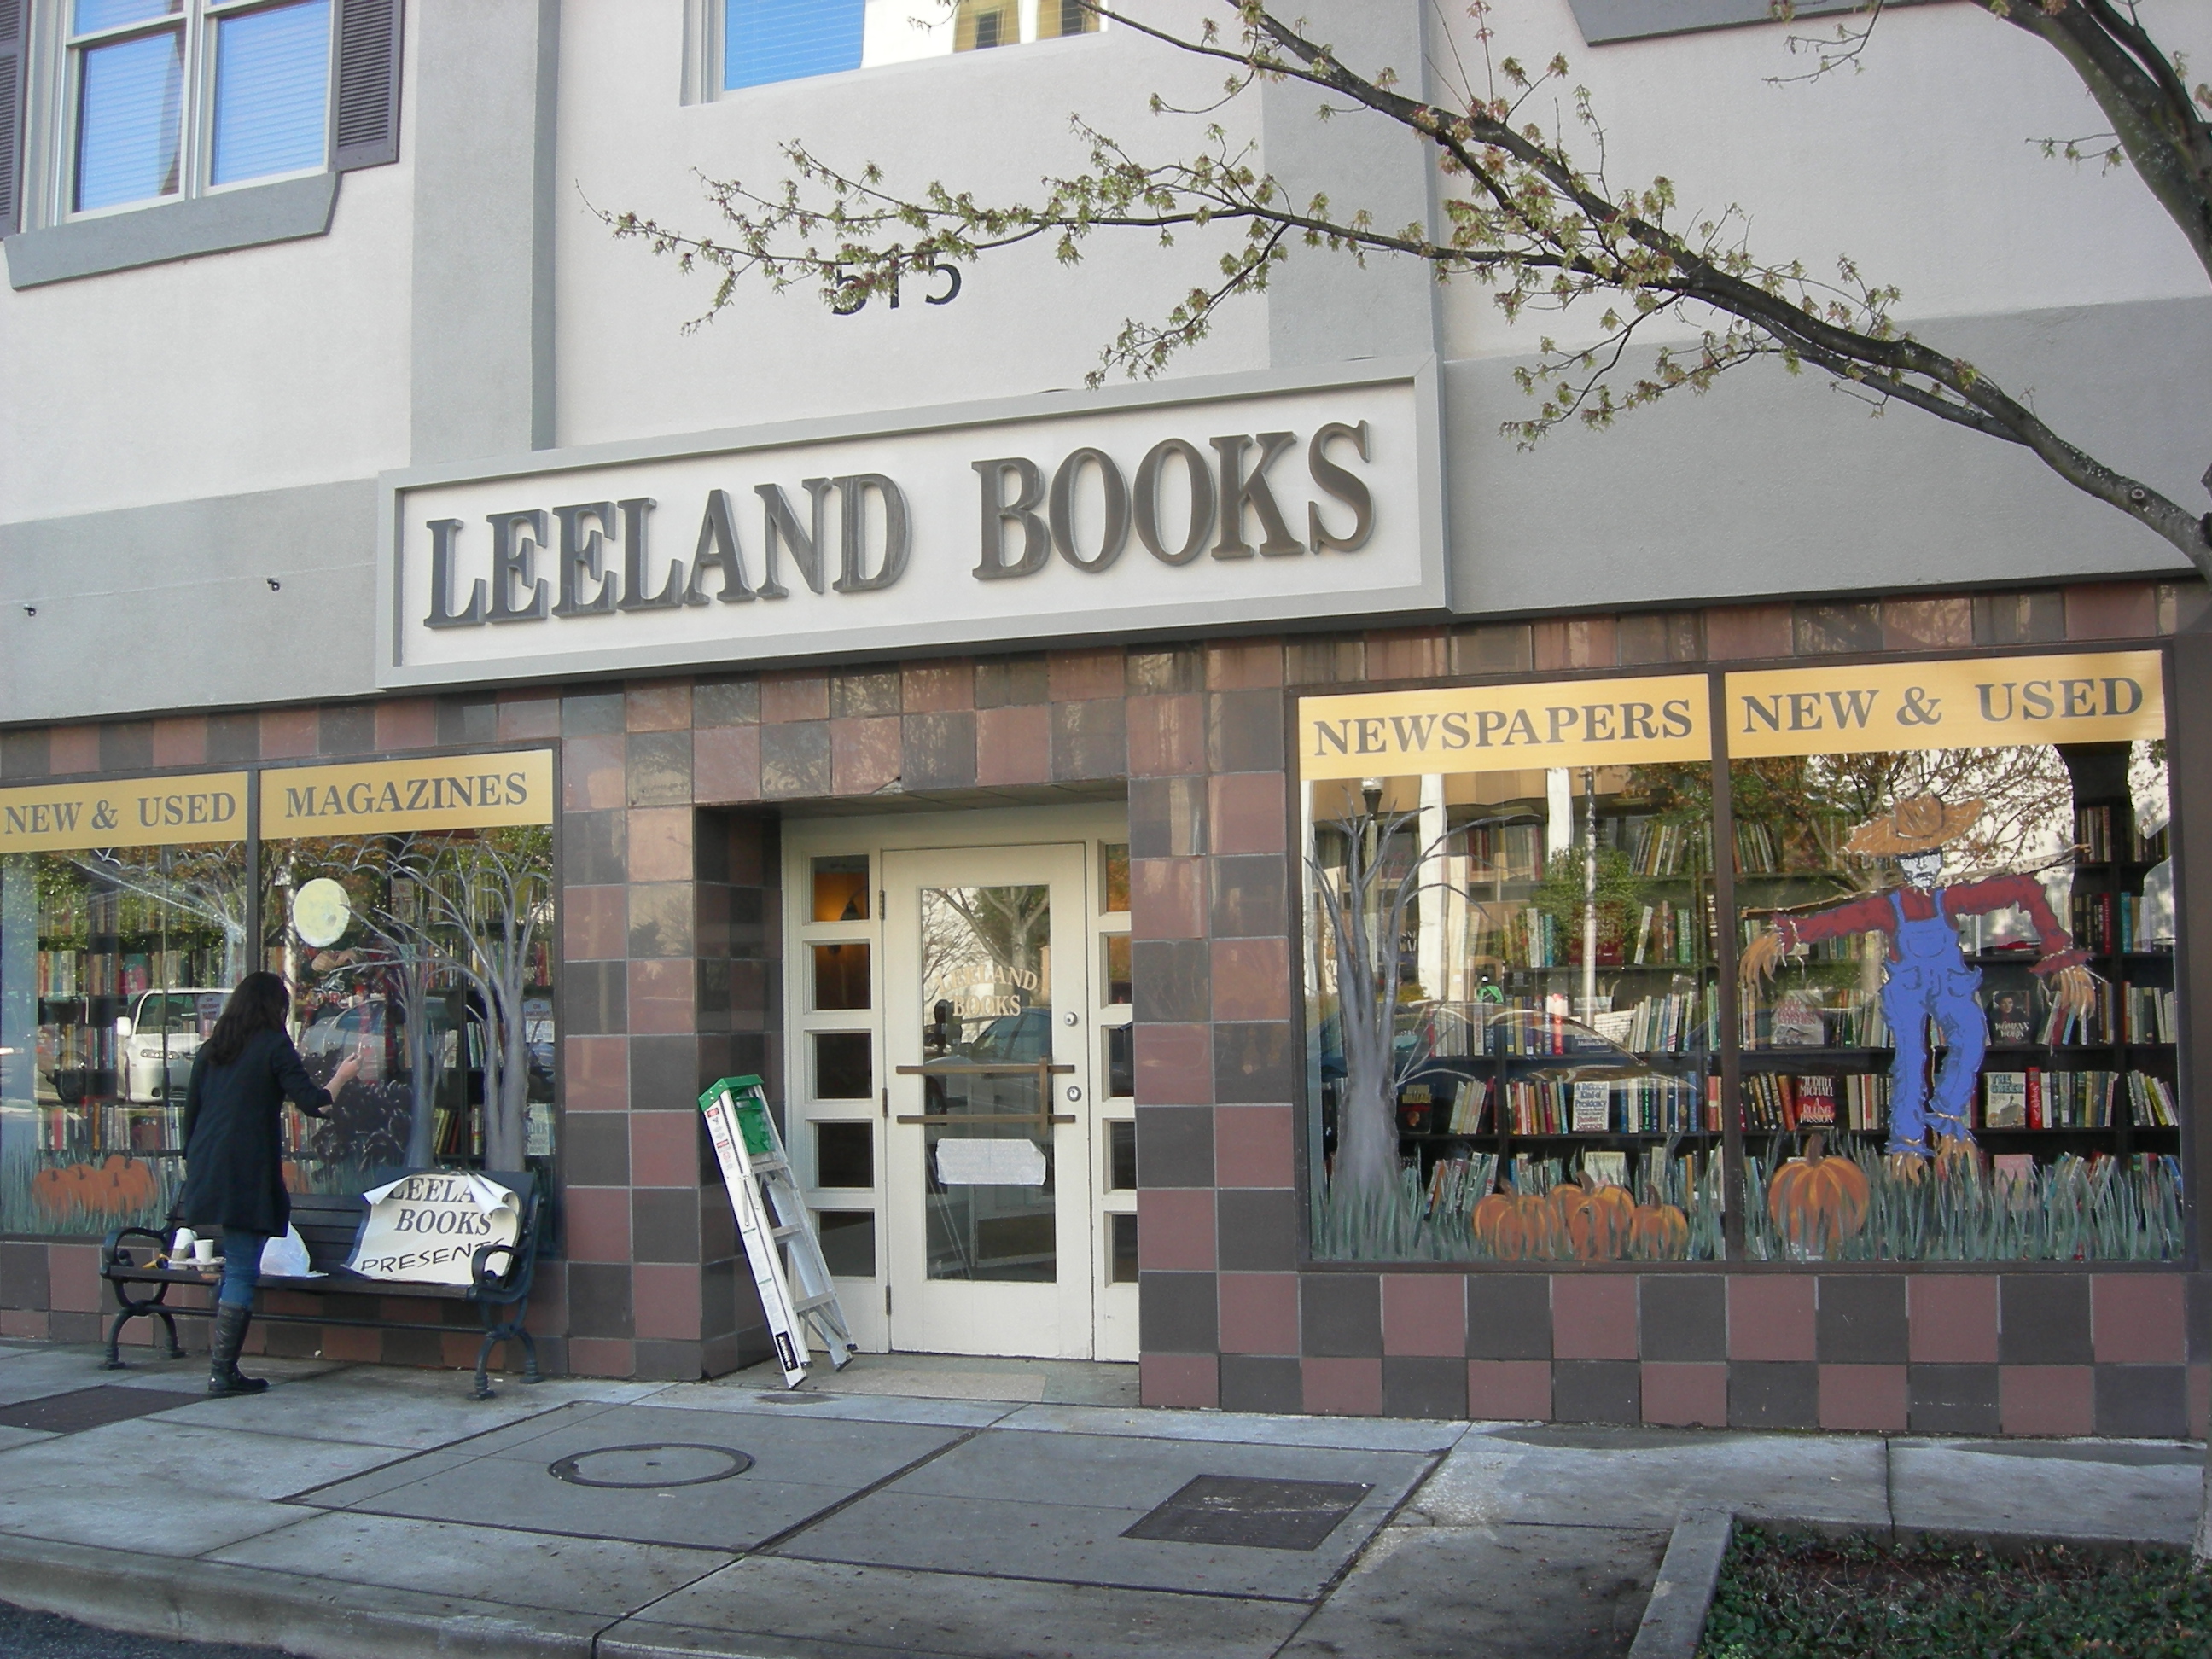 leeland-books